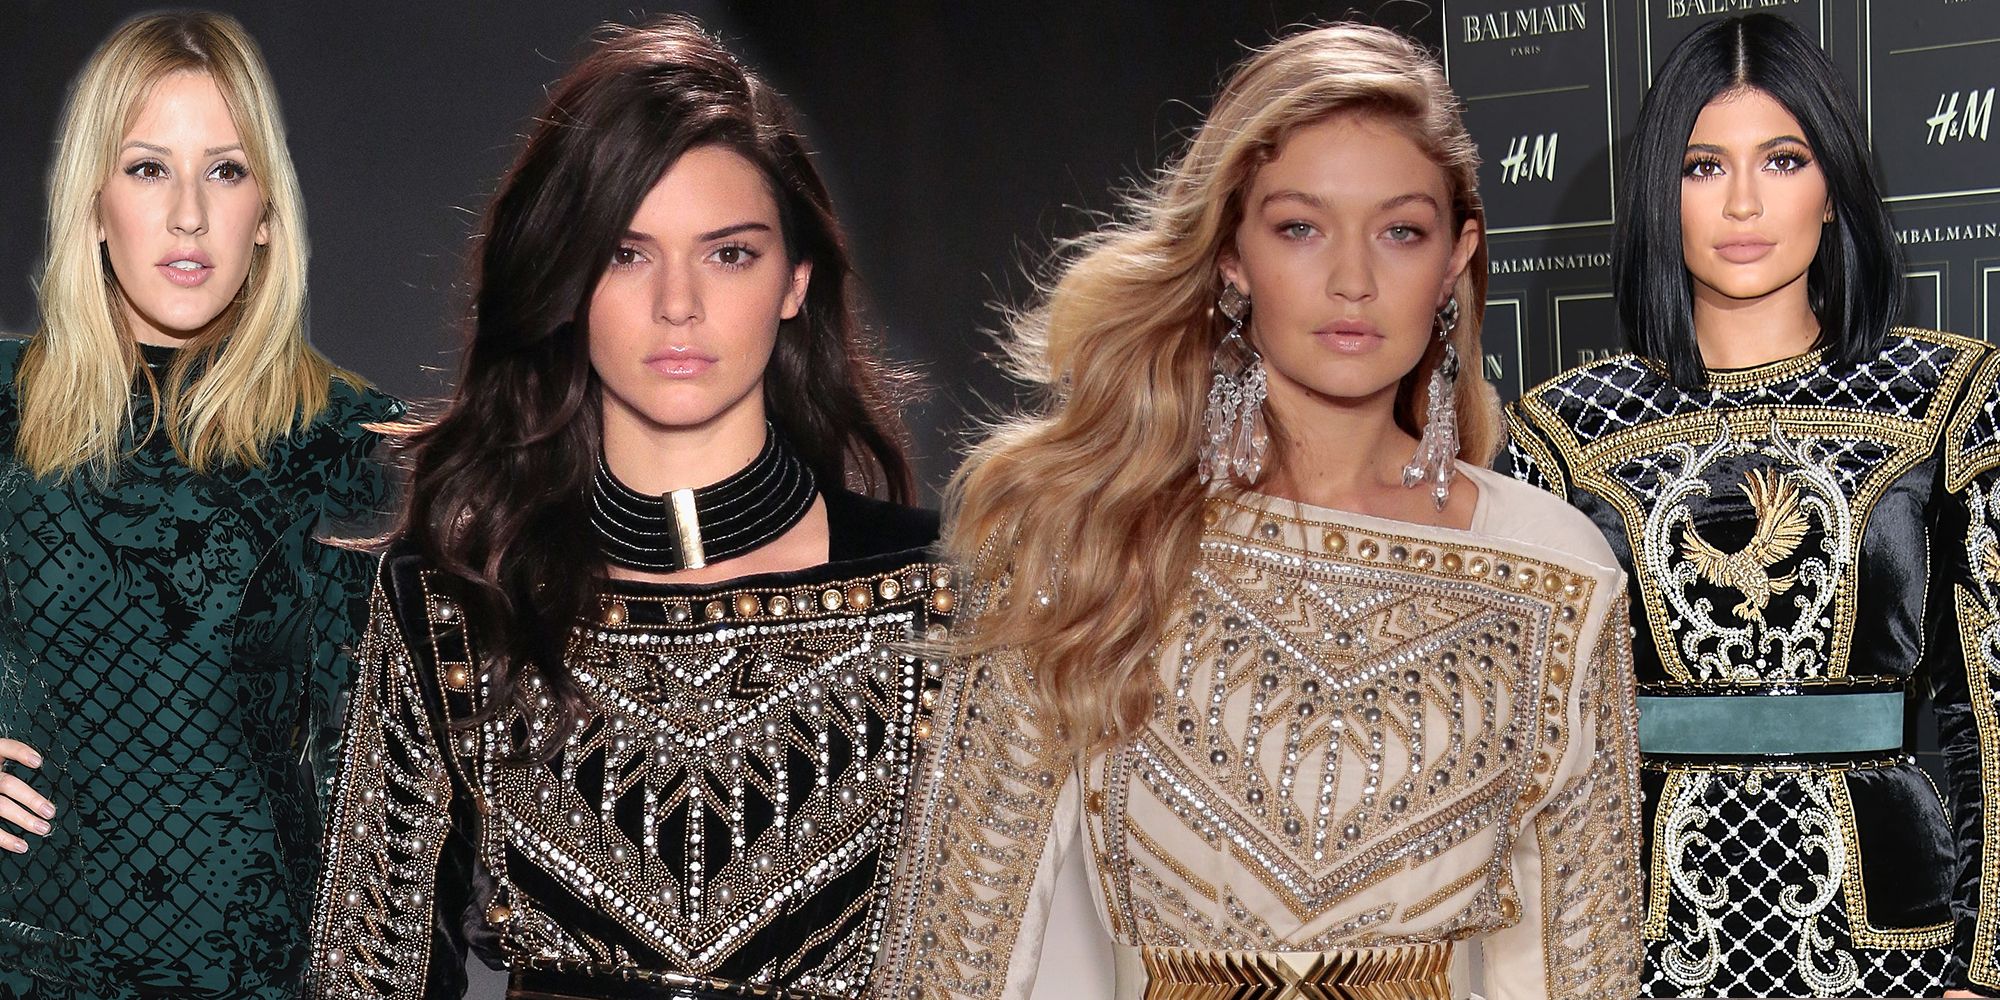 Balmain H&M launch in photos: Kendall Jenner and Gigi Hadid rock the runway